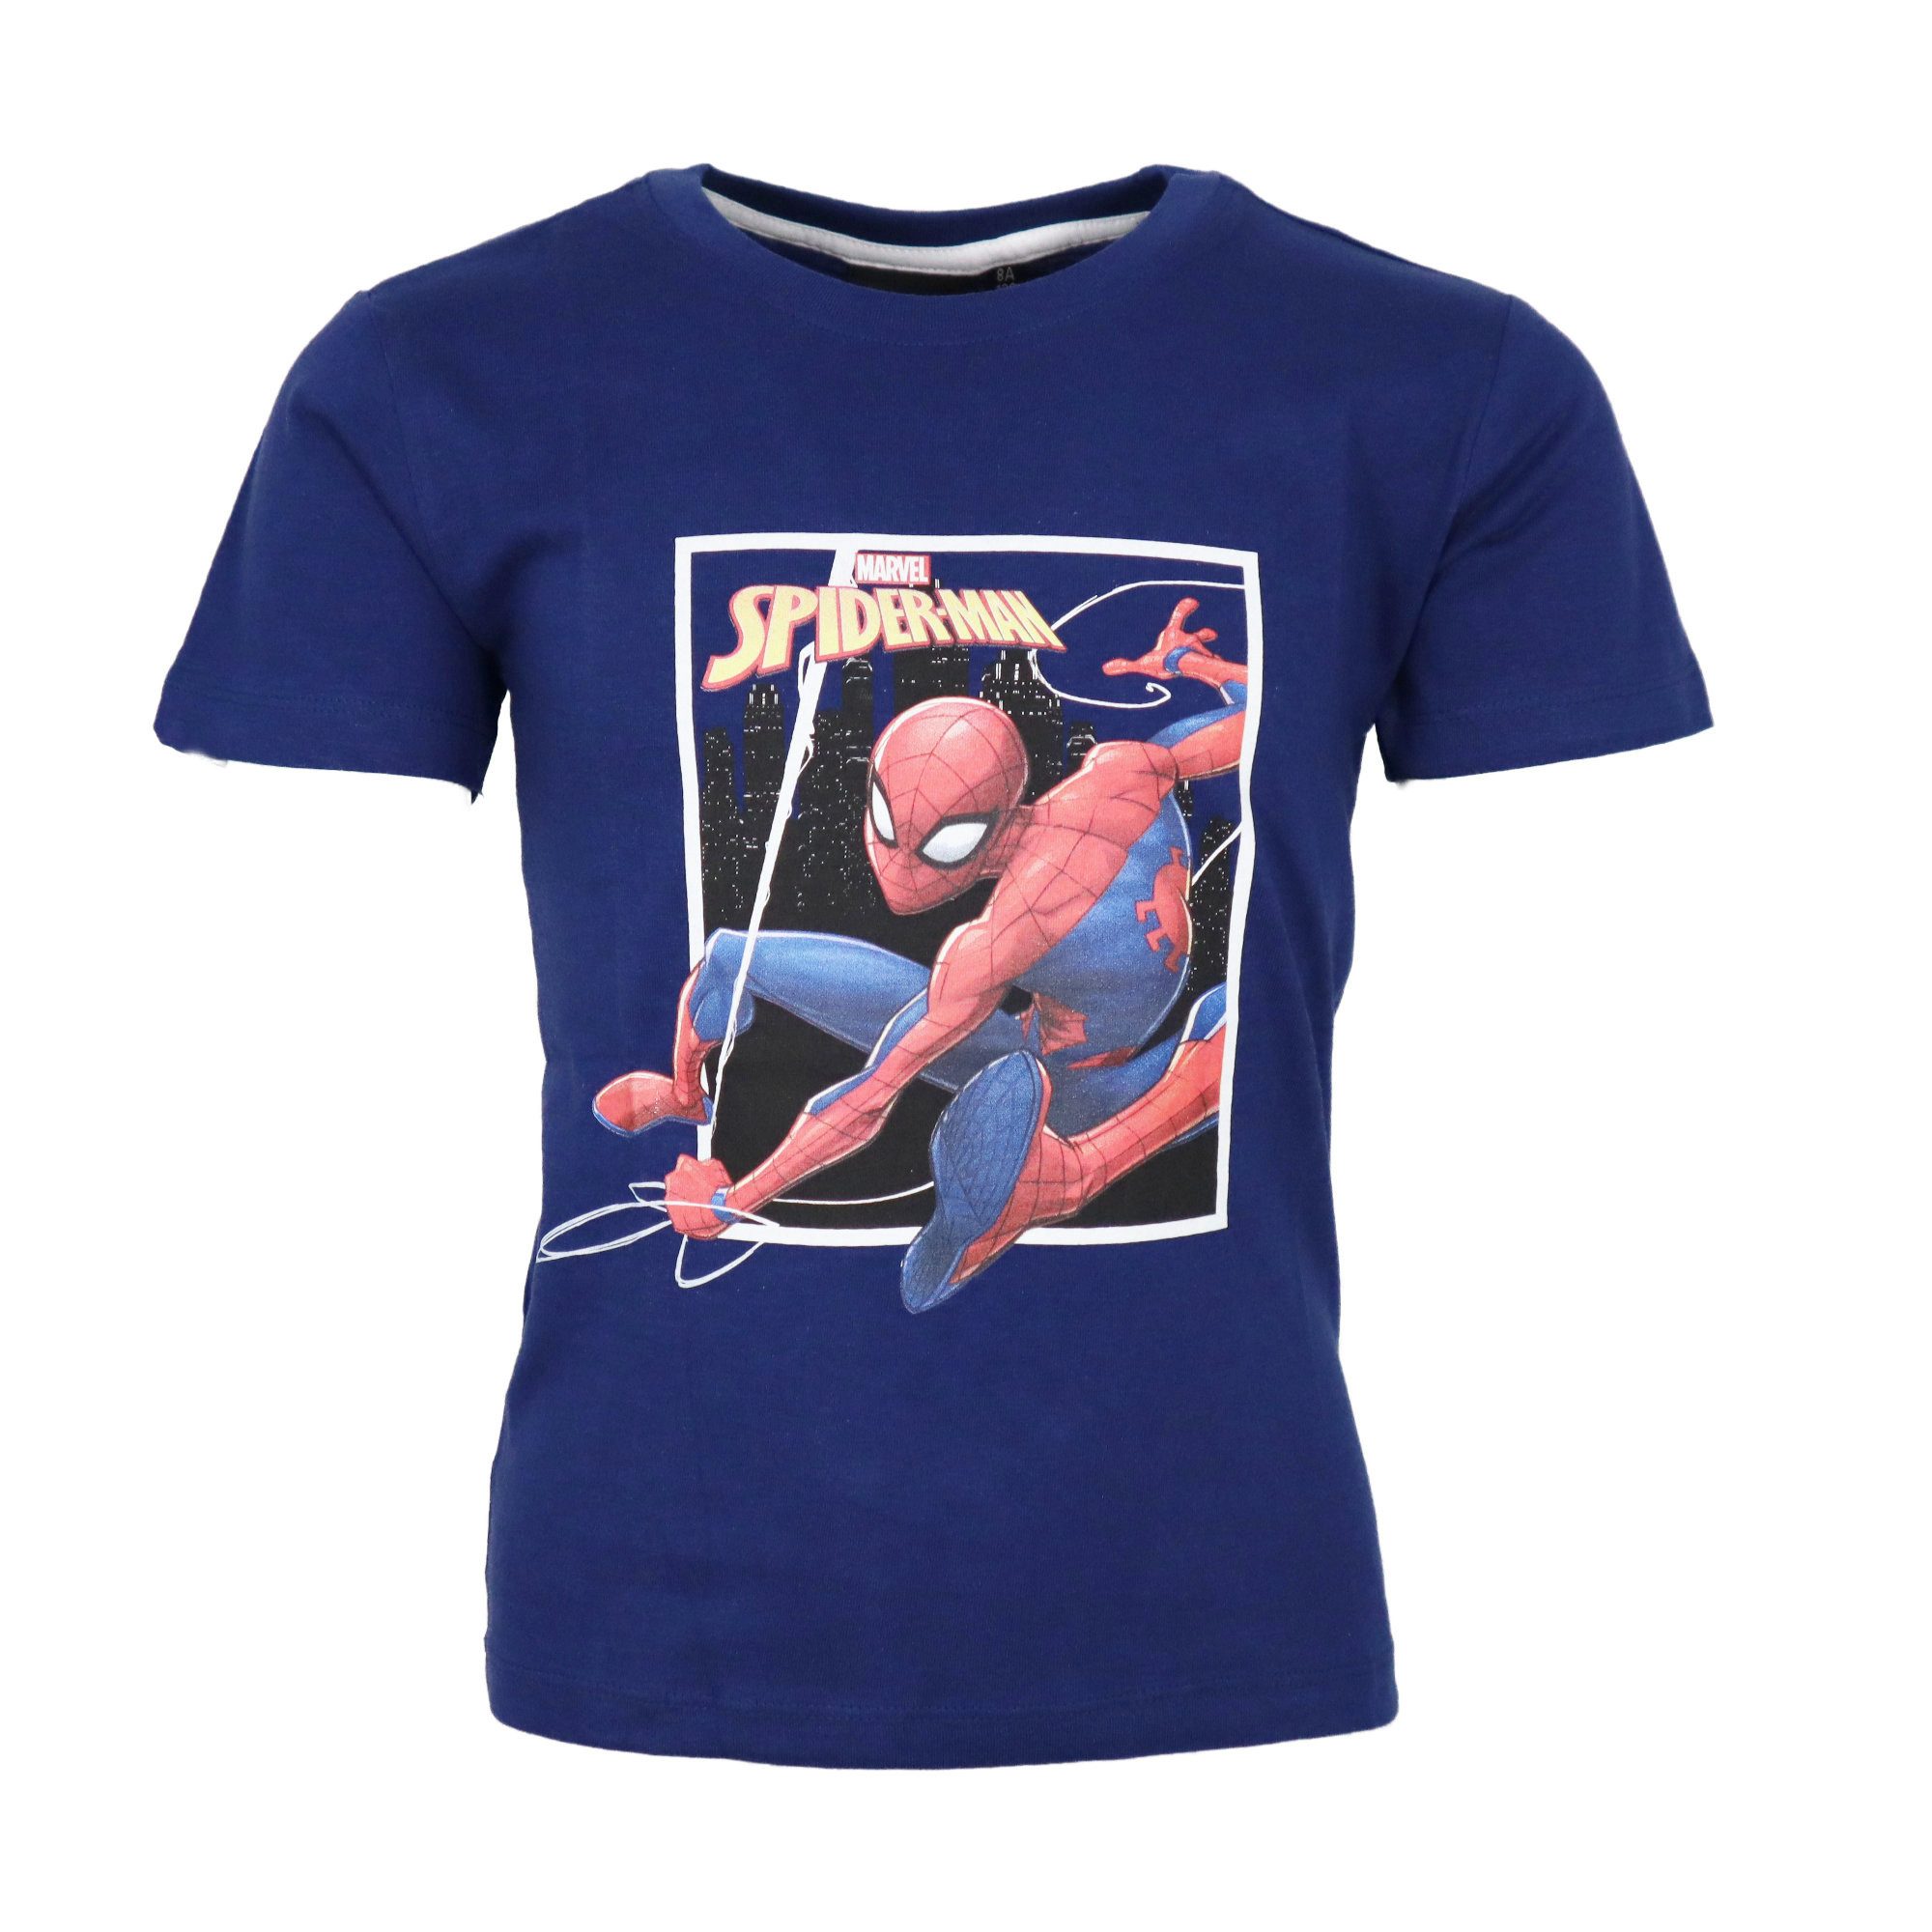 MARVEL Print-Shirt Marvel Spiderman T-Shirt kurzarm Kinder Jungen Shirt Gr. 98 bis 128, Baumwolle